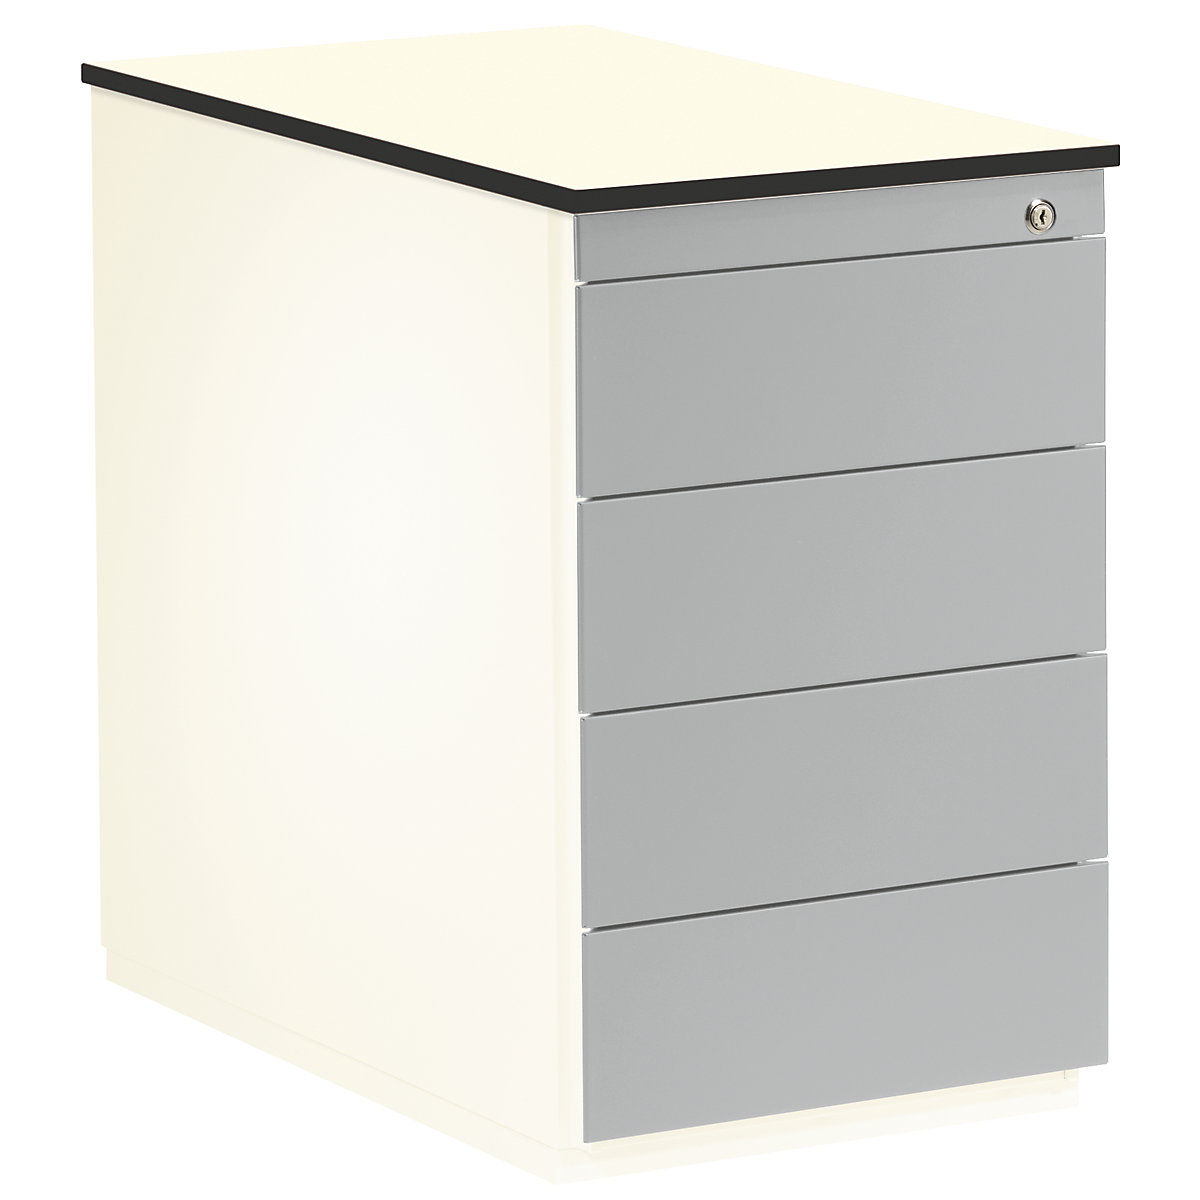 Casetieră cu sertare – mauser, î. x ad. 708 x 800 mm, 4 sertare, alb pur / alb aluminiu / alb